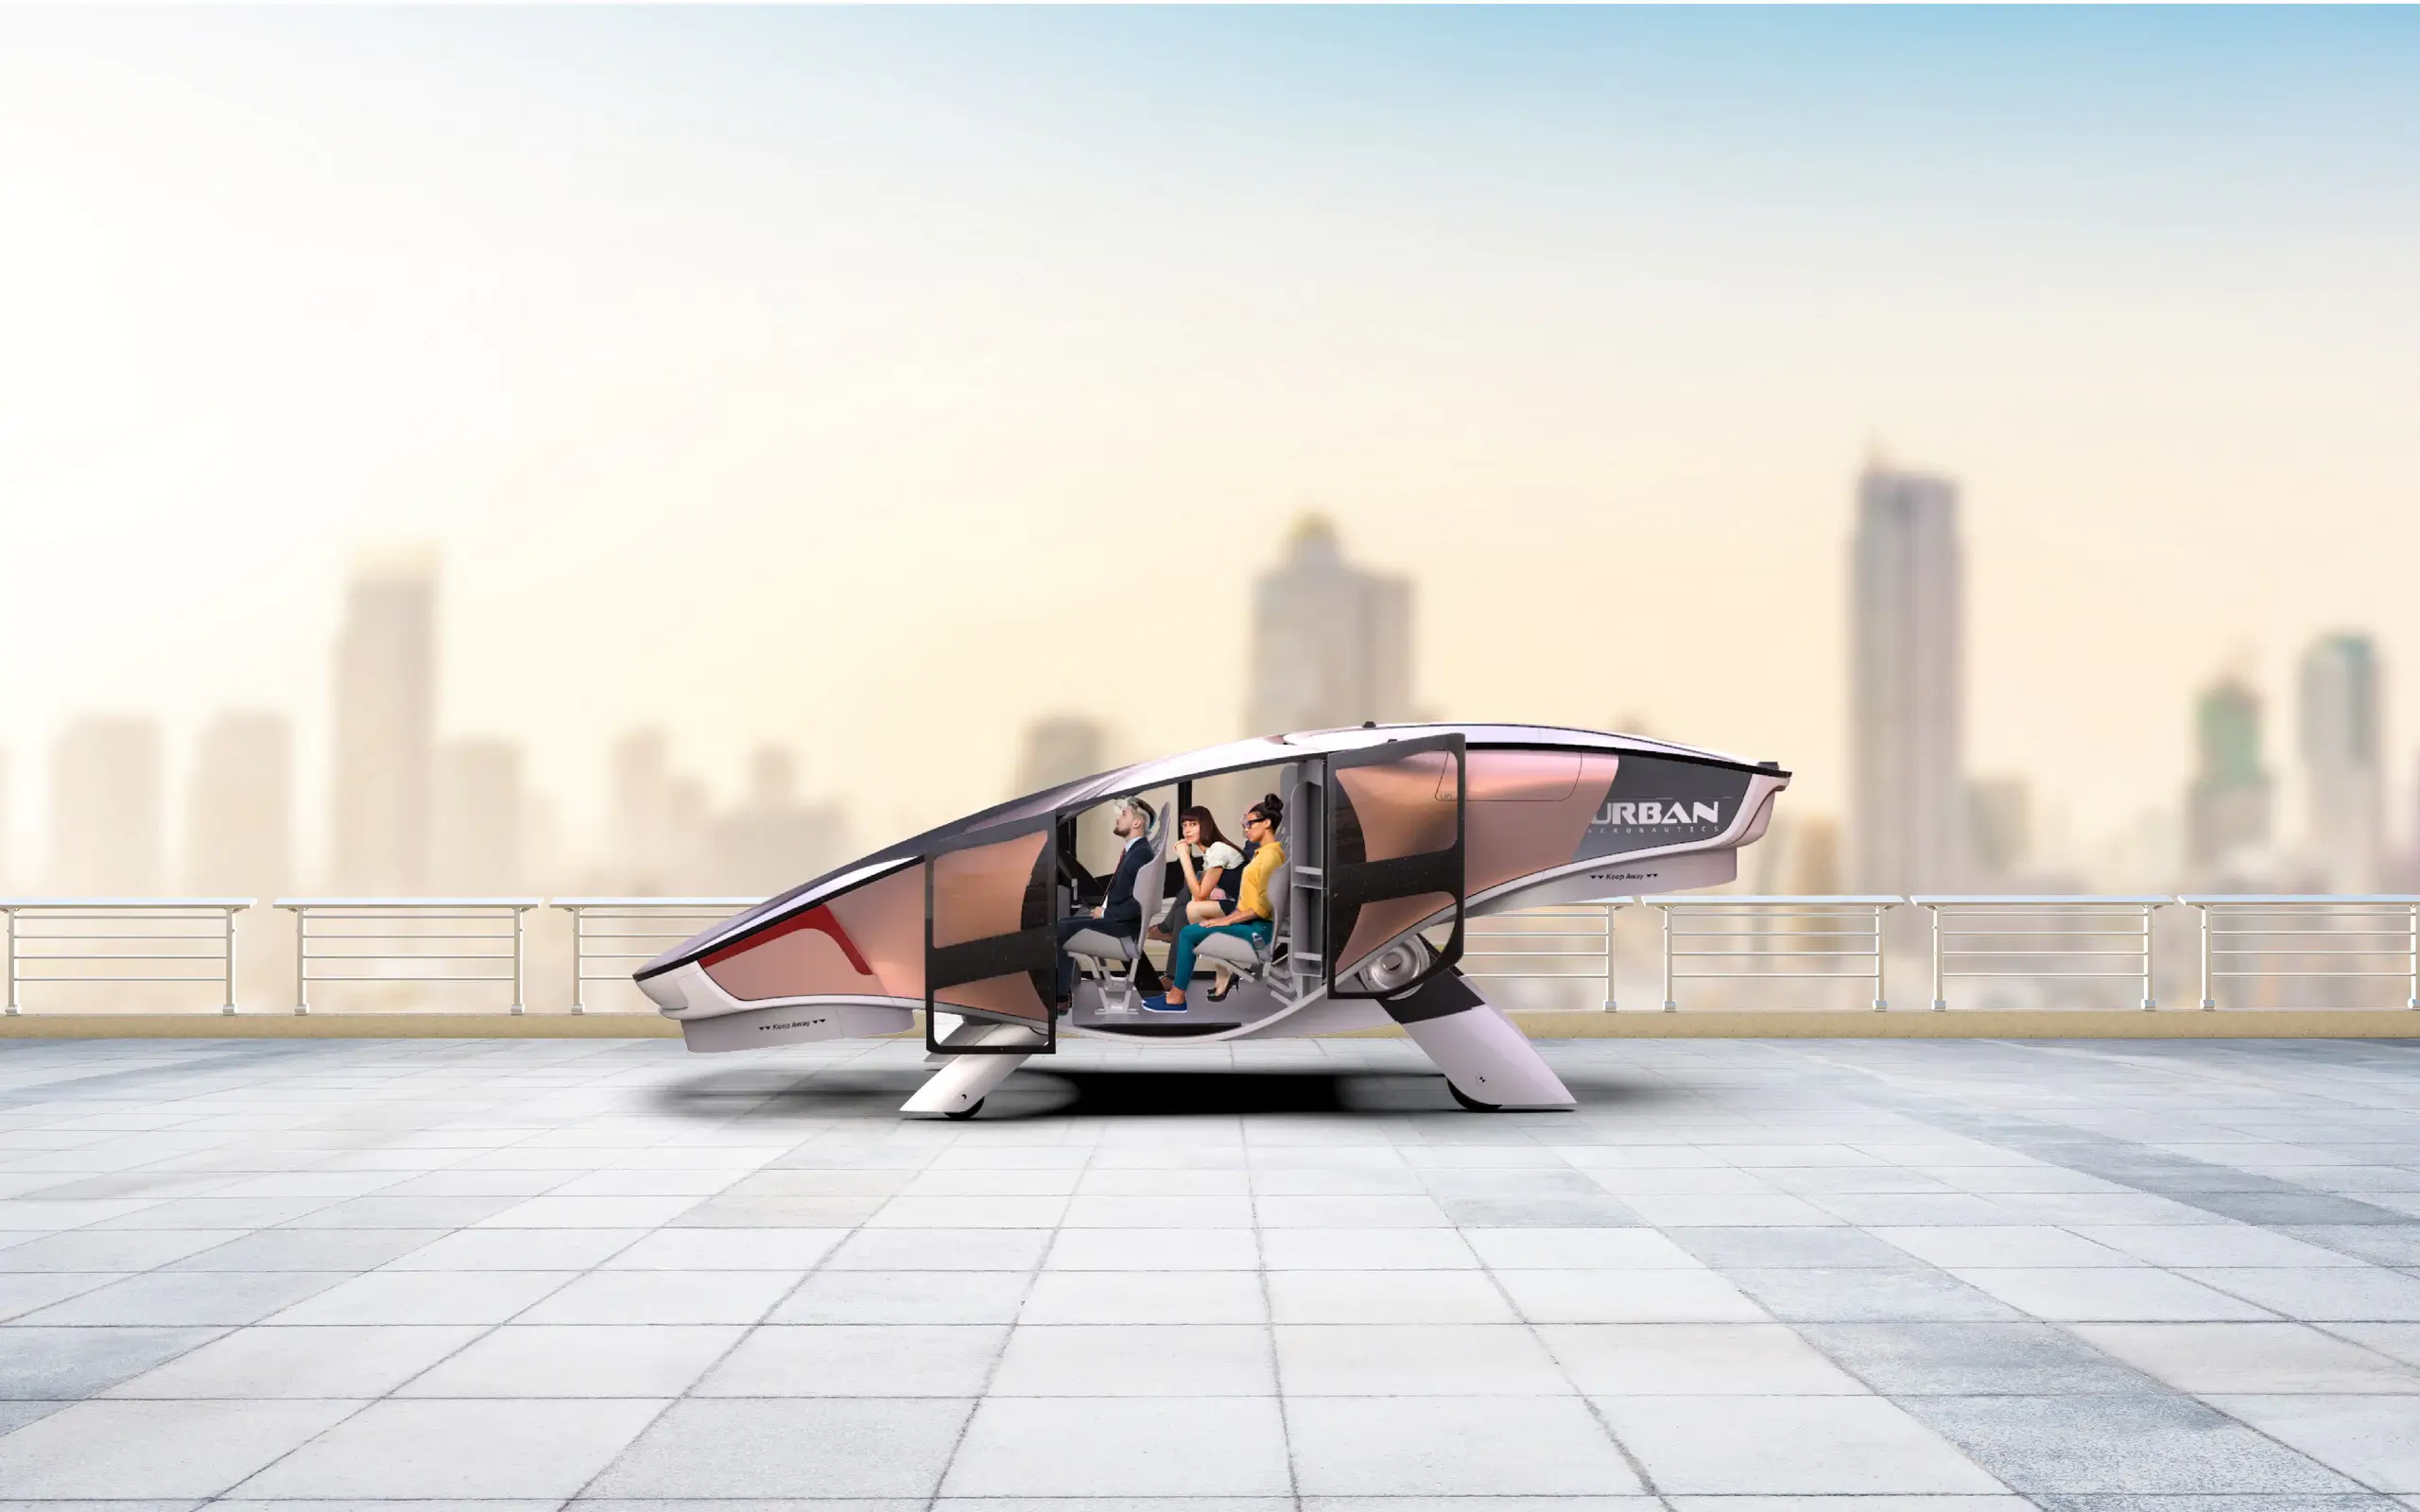 CityHawk le taxi du futur